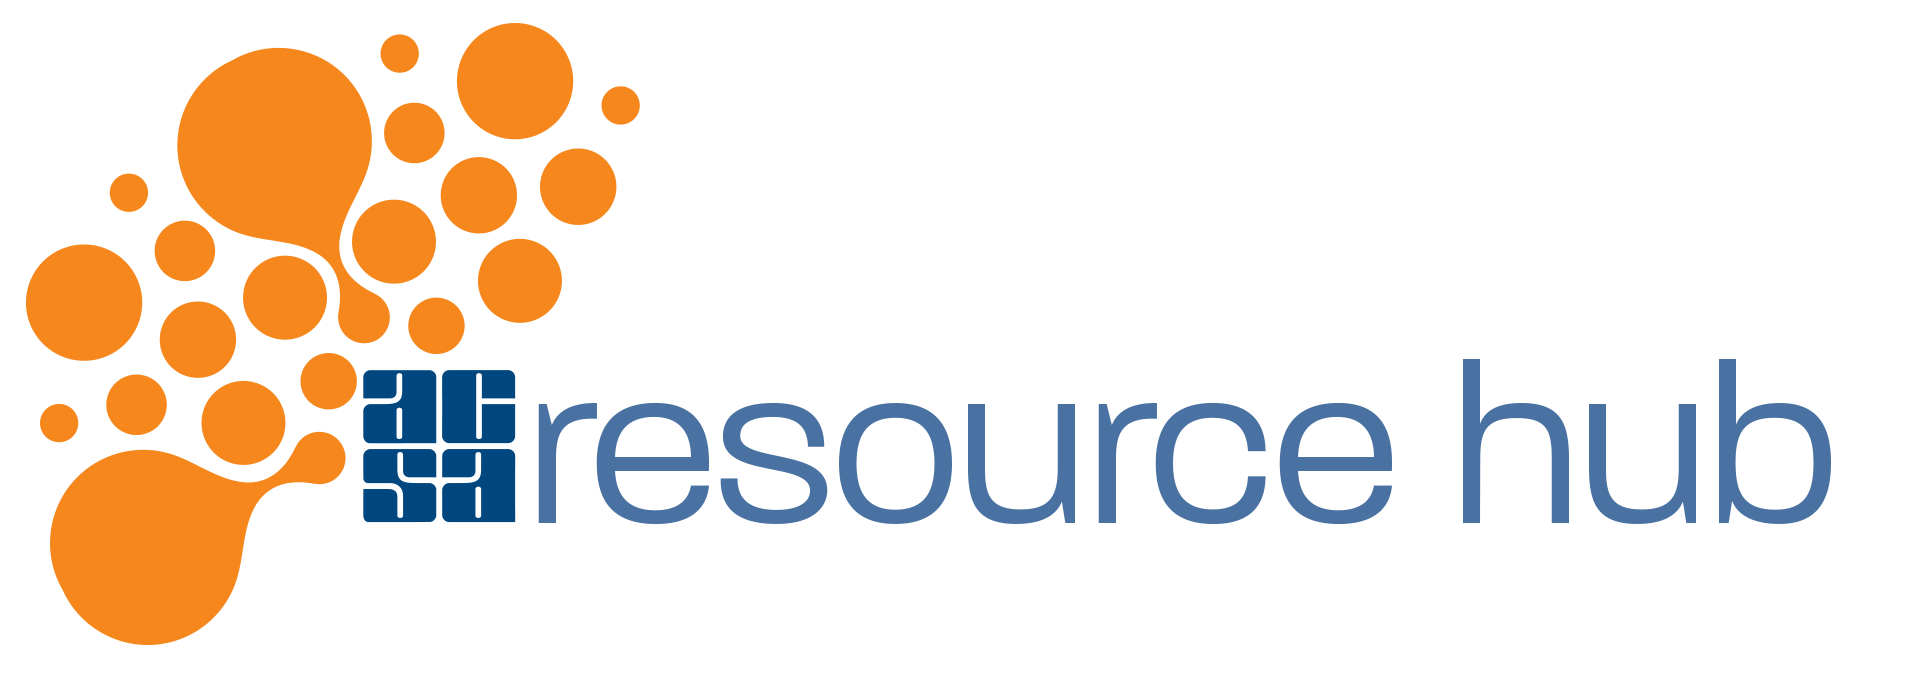 ACSA's Resource Hub.